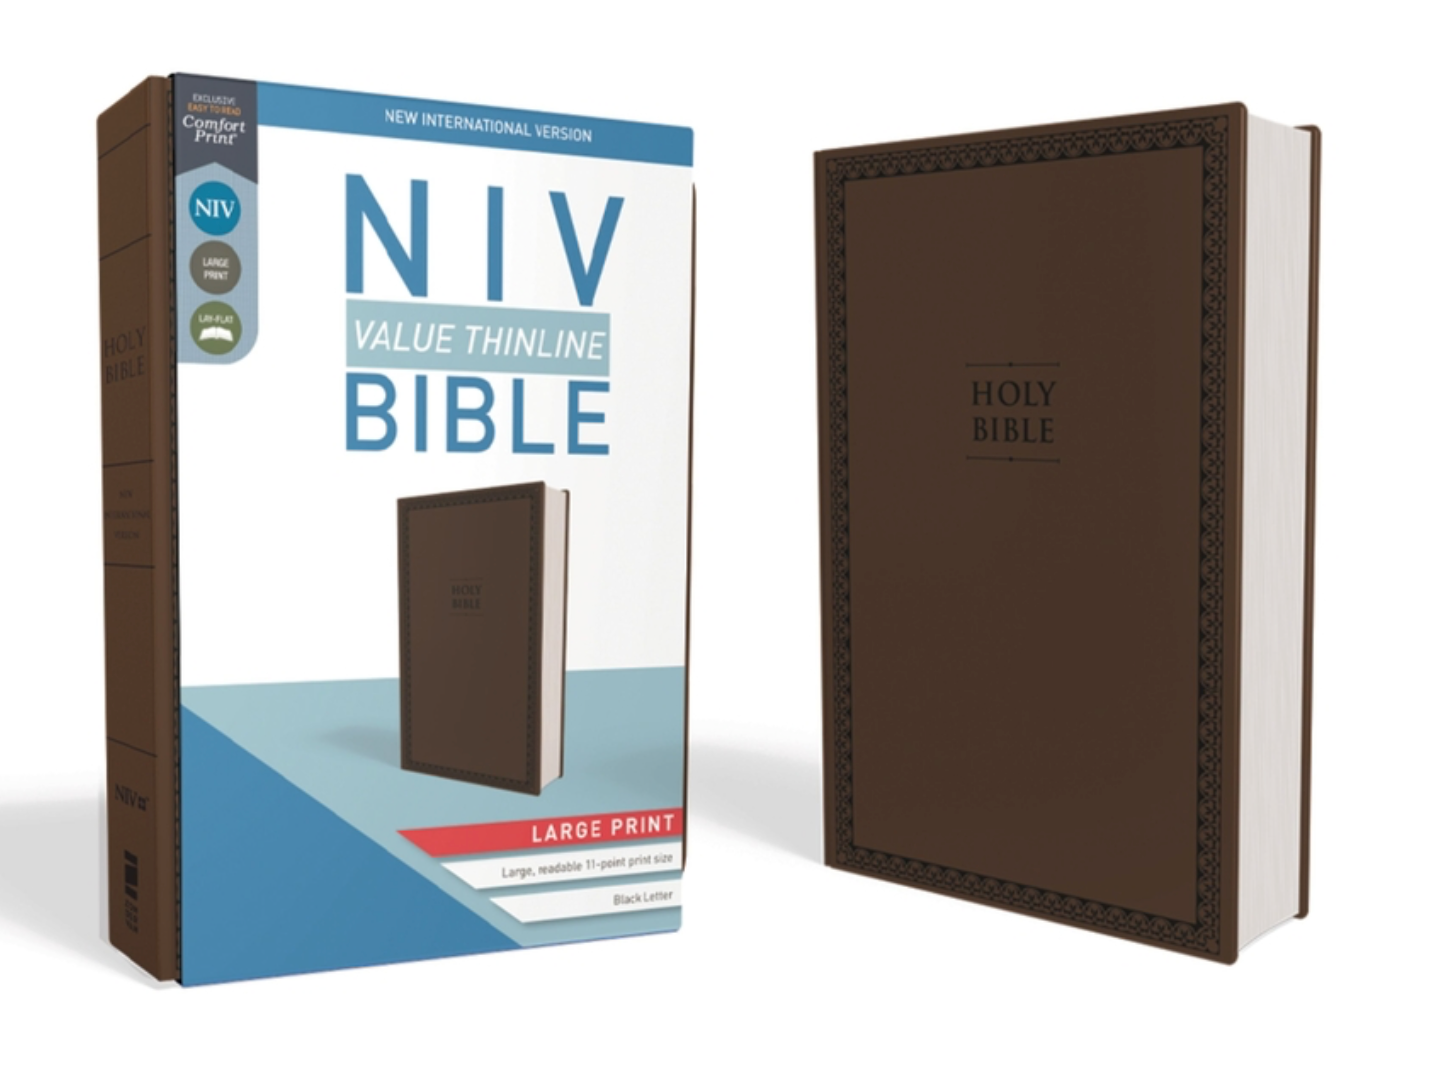 NIV Value Thinline Bible - Large Print